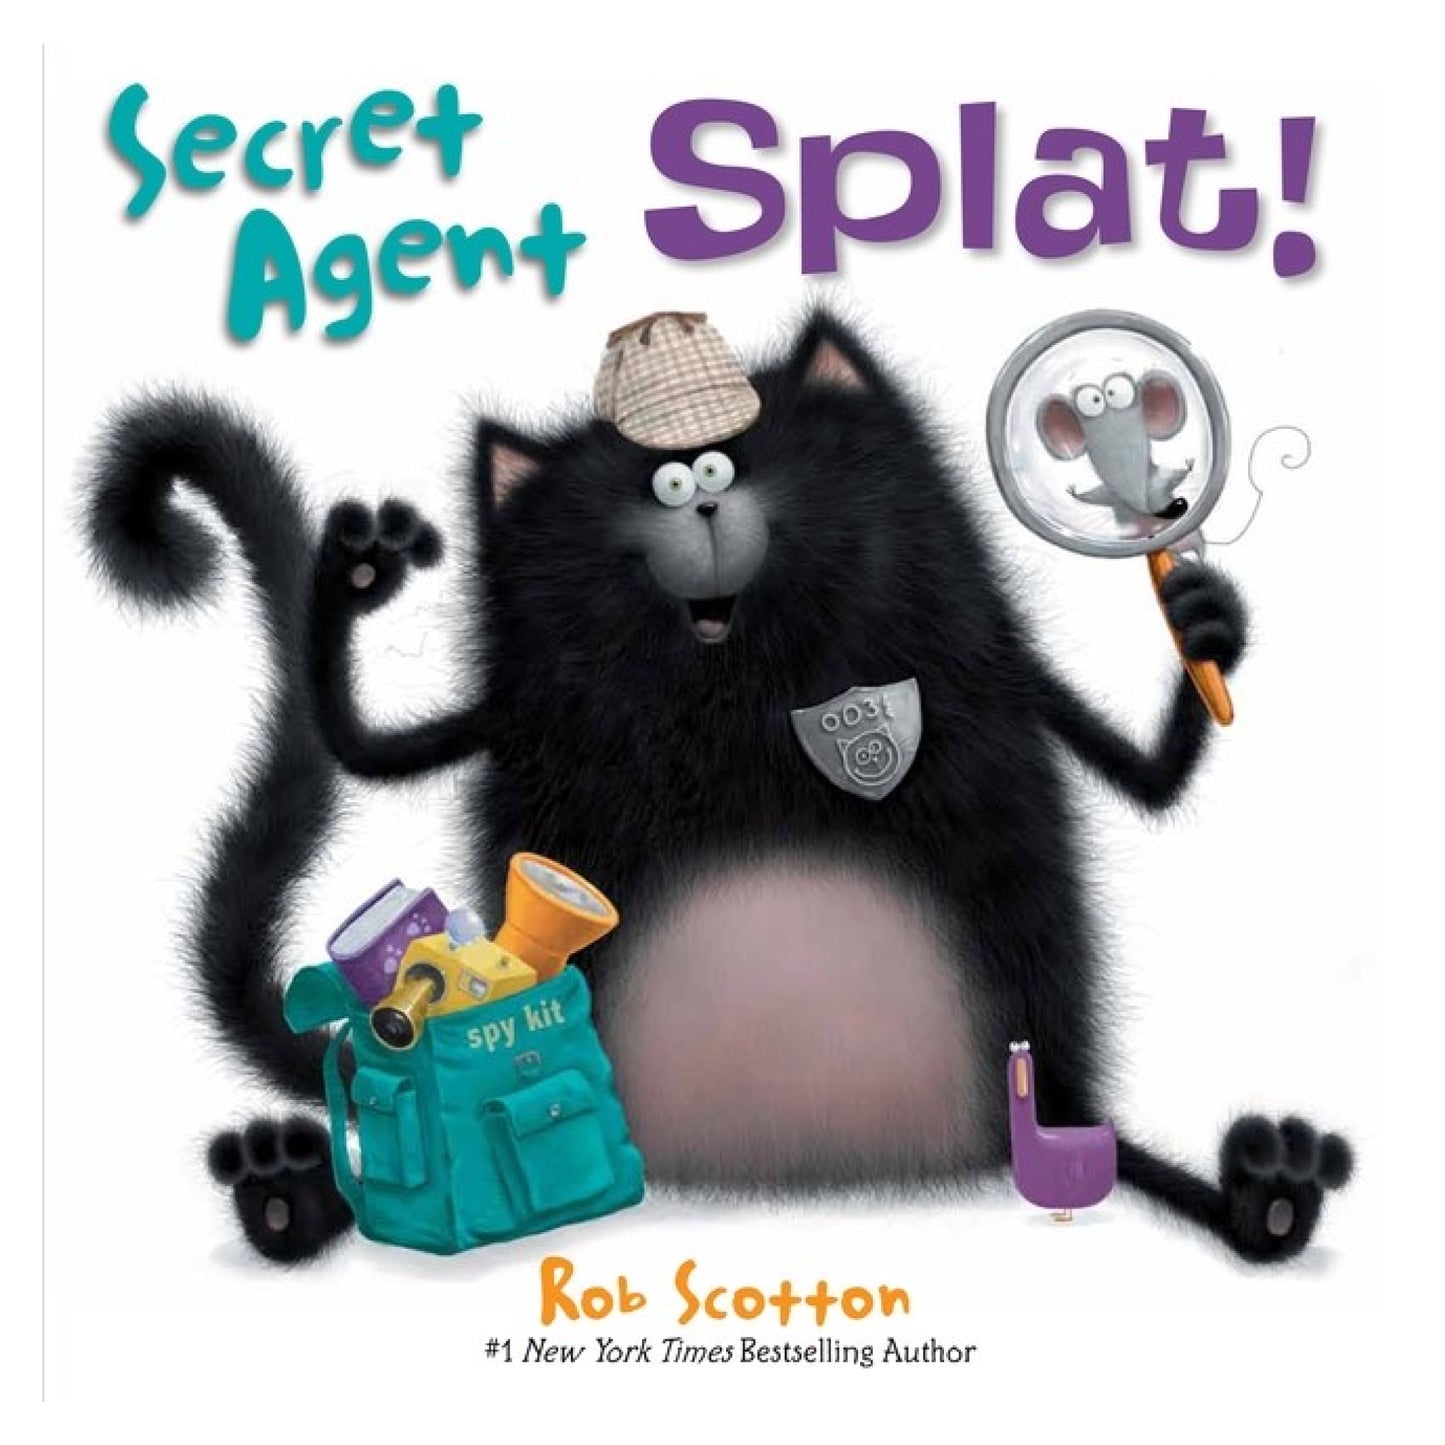 Secret Agent Splat!